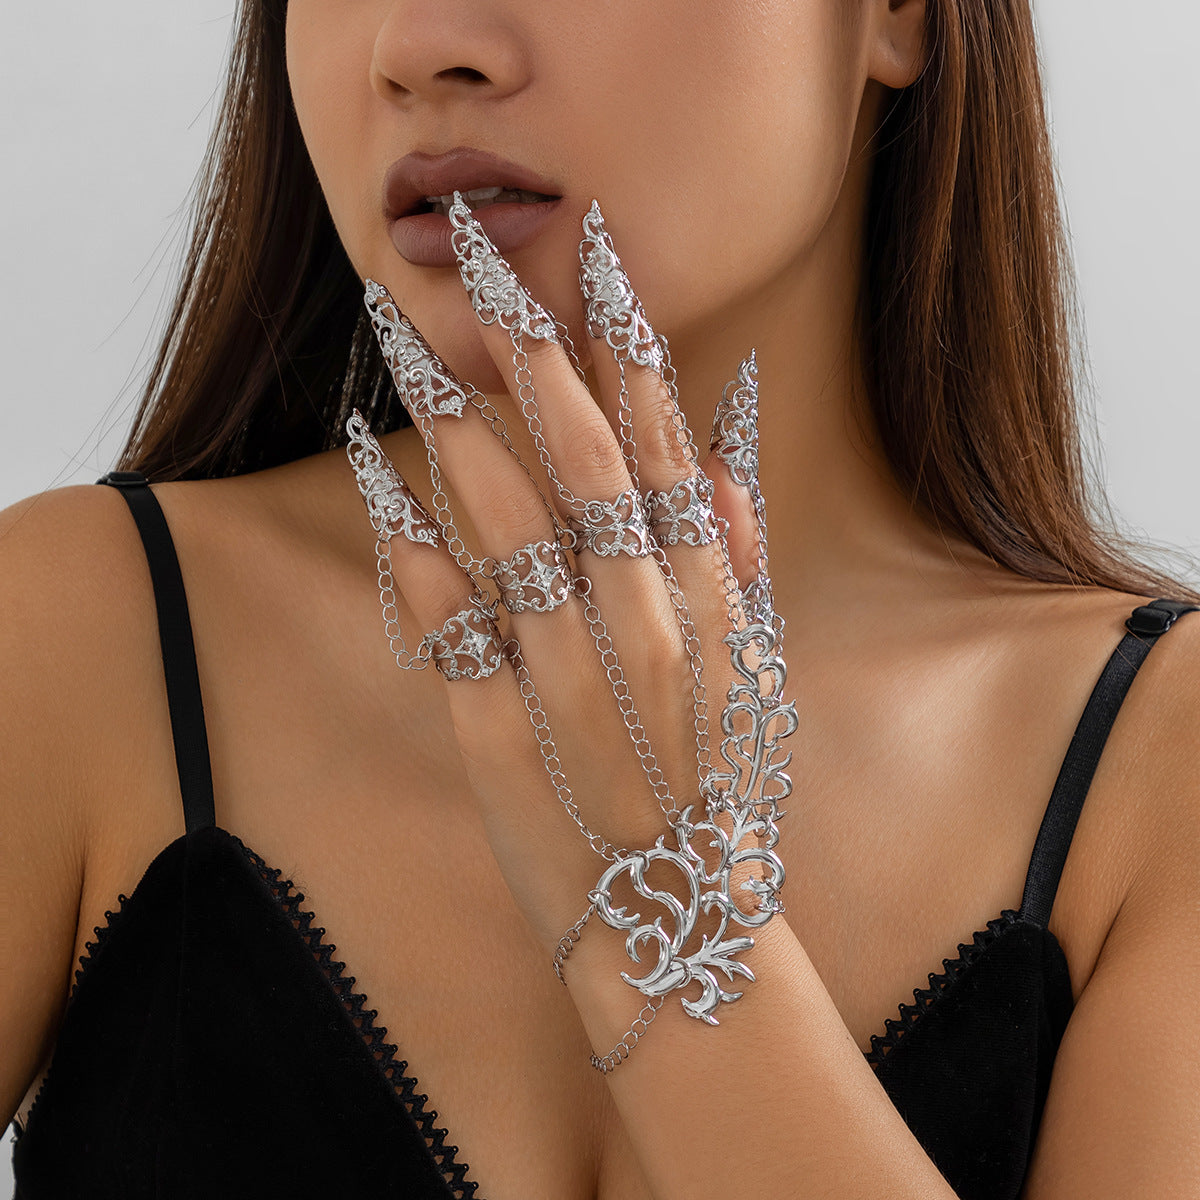 Hollow Tapered Fingernail Cap Mitten-type Bracelet Women